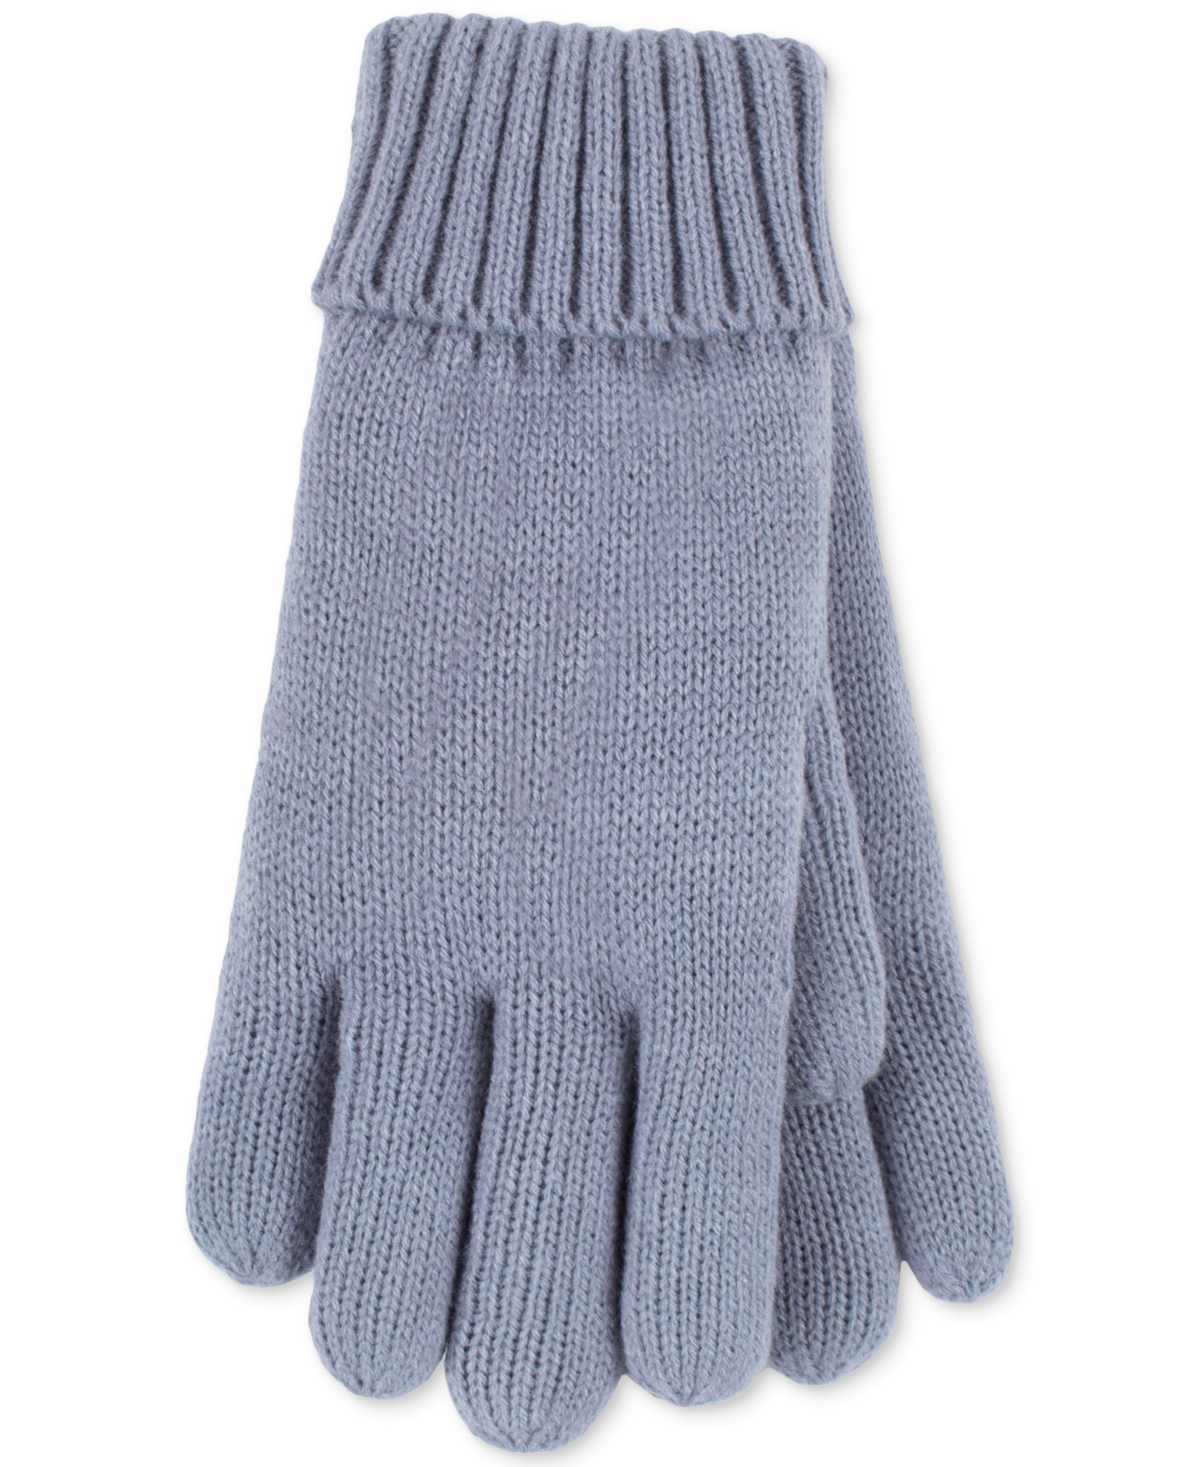 Carina Flat Knit Gloves - Dusty Blue